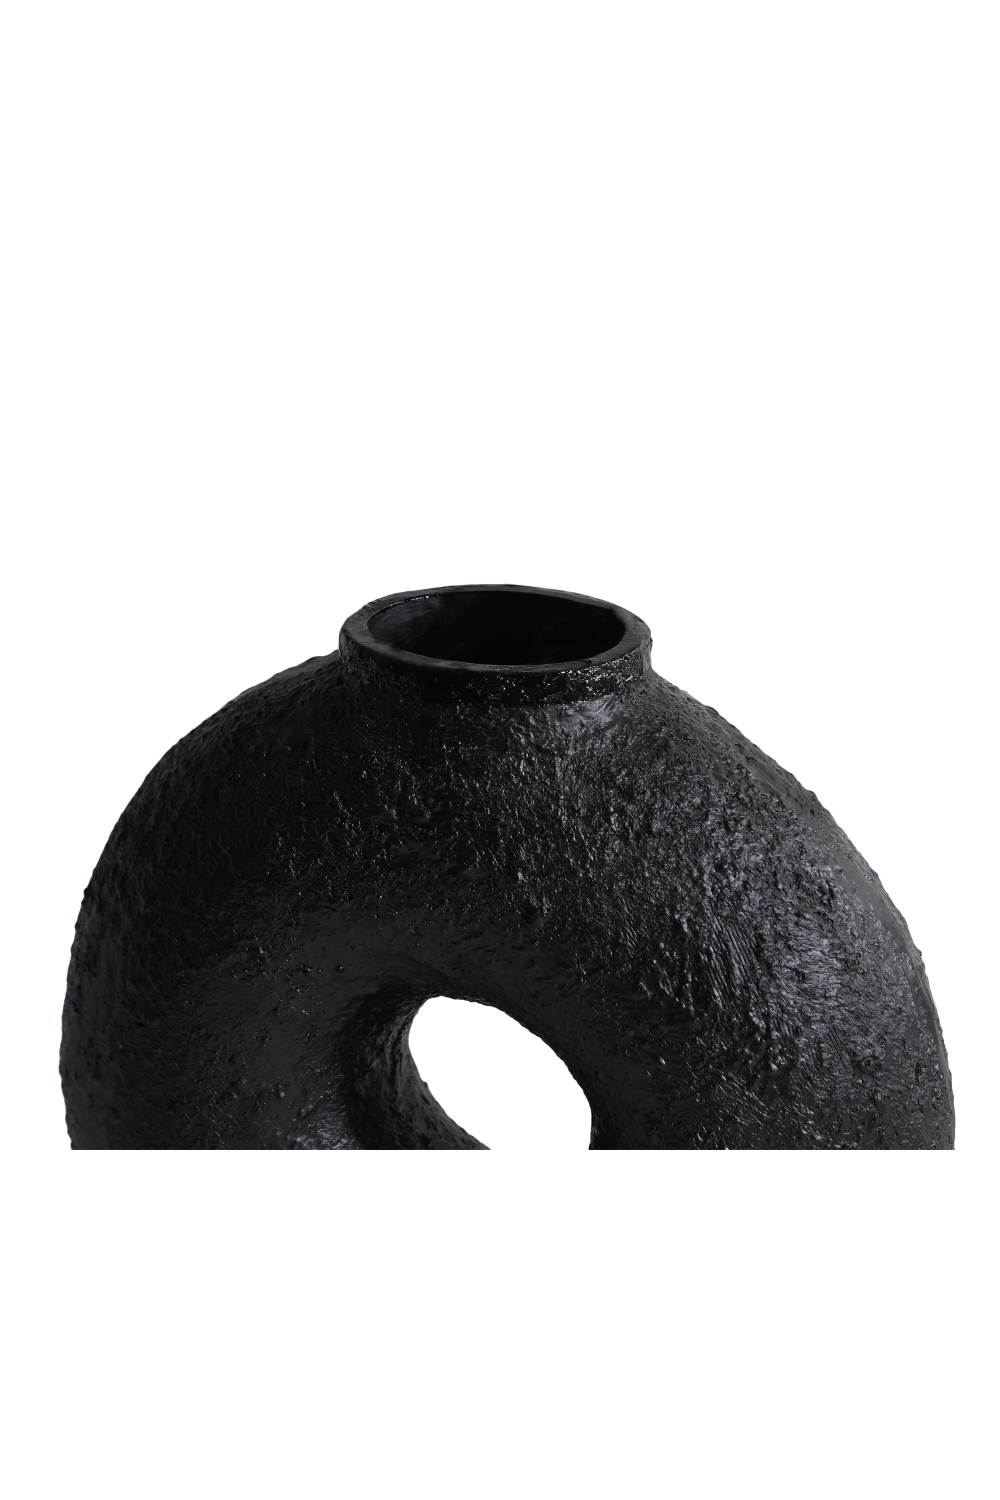 Black Circular Vase | Liang & Eimil Dane | Oroa.com